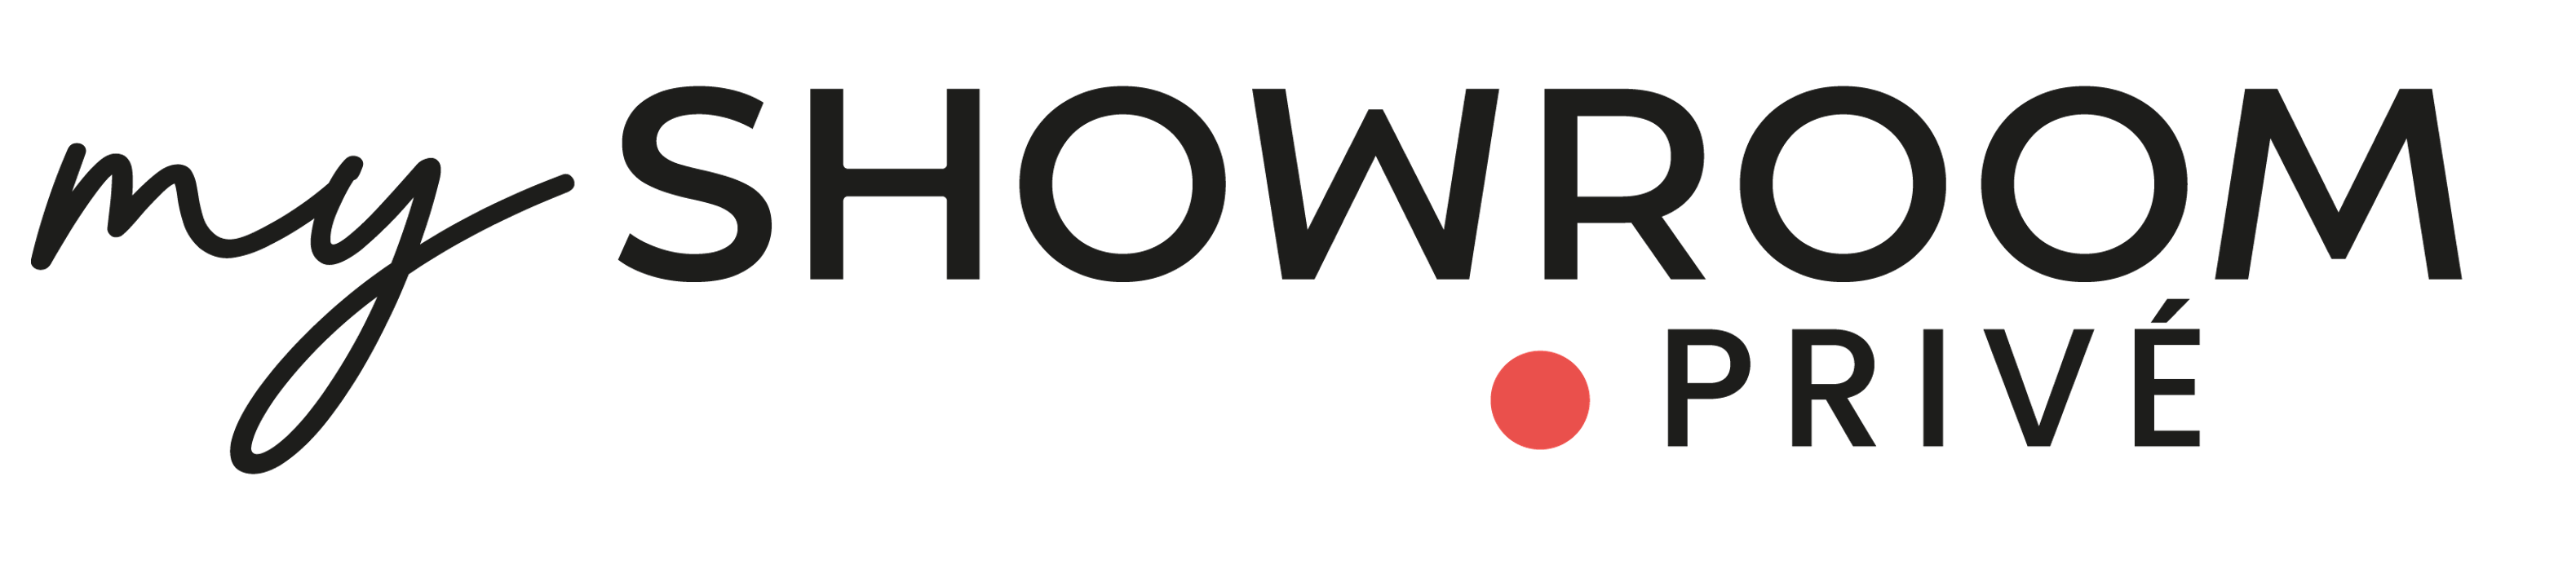 myshowroomprive logo